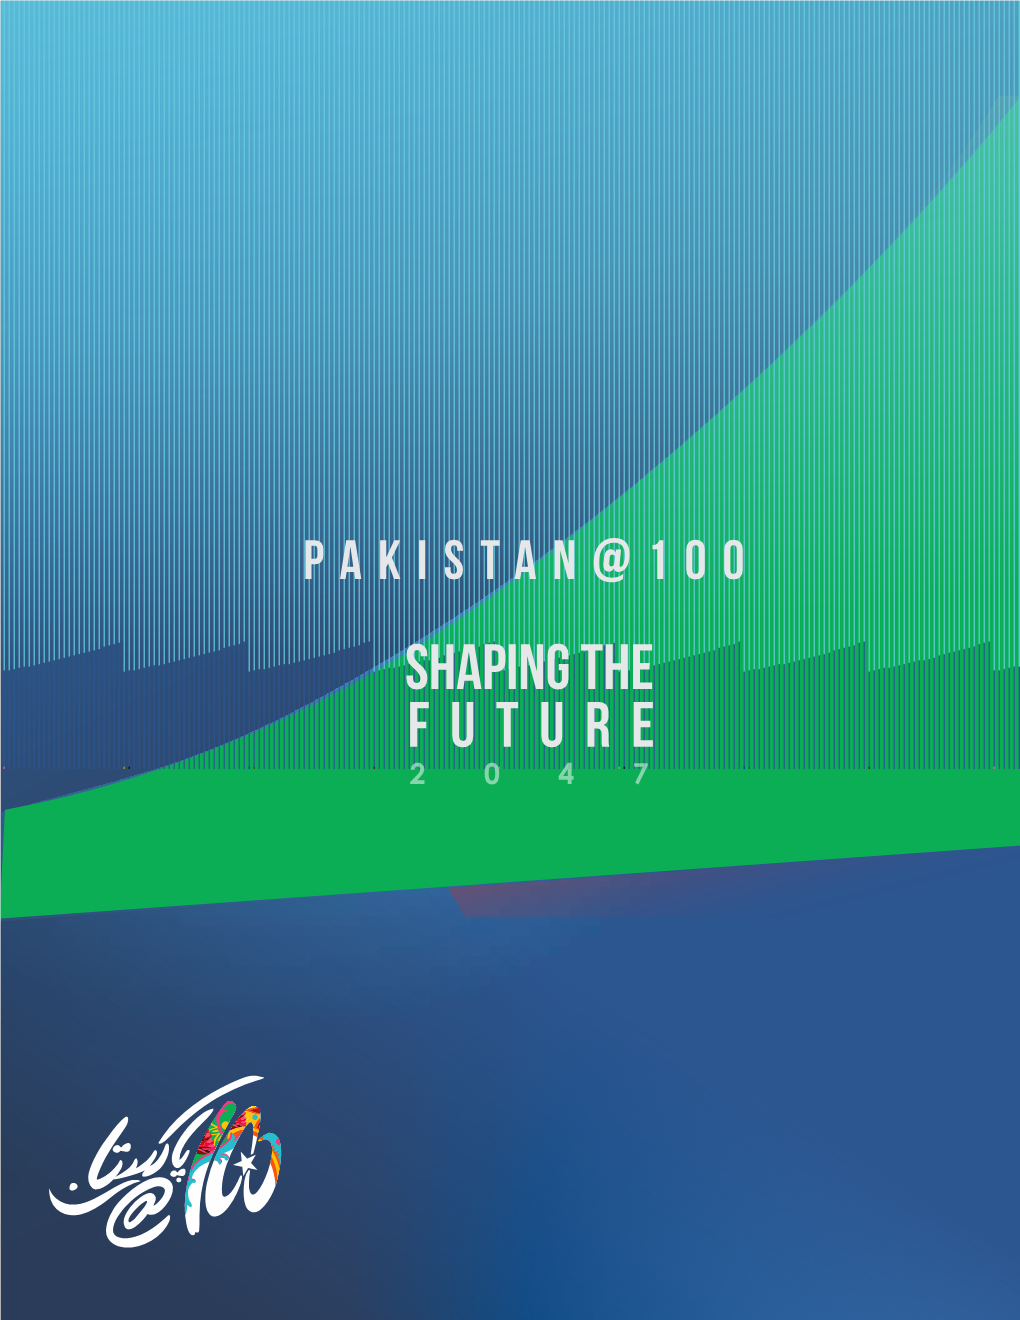 Pakistan@100: Shaping the Future © 2019 the World Bank 1818 H Street NW, Washington DC 20433 Telephone: 202-473-1000; Internet